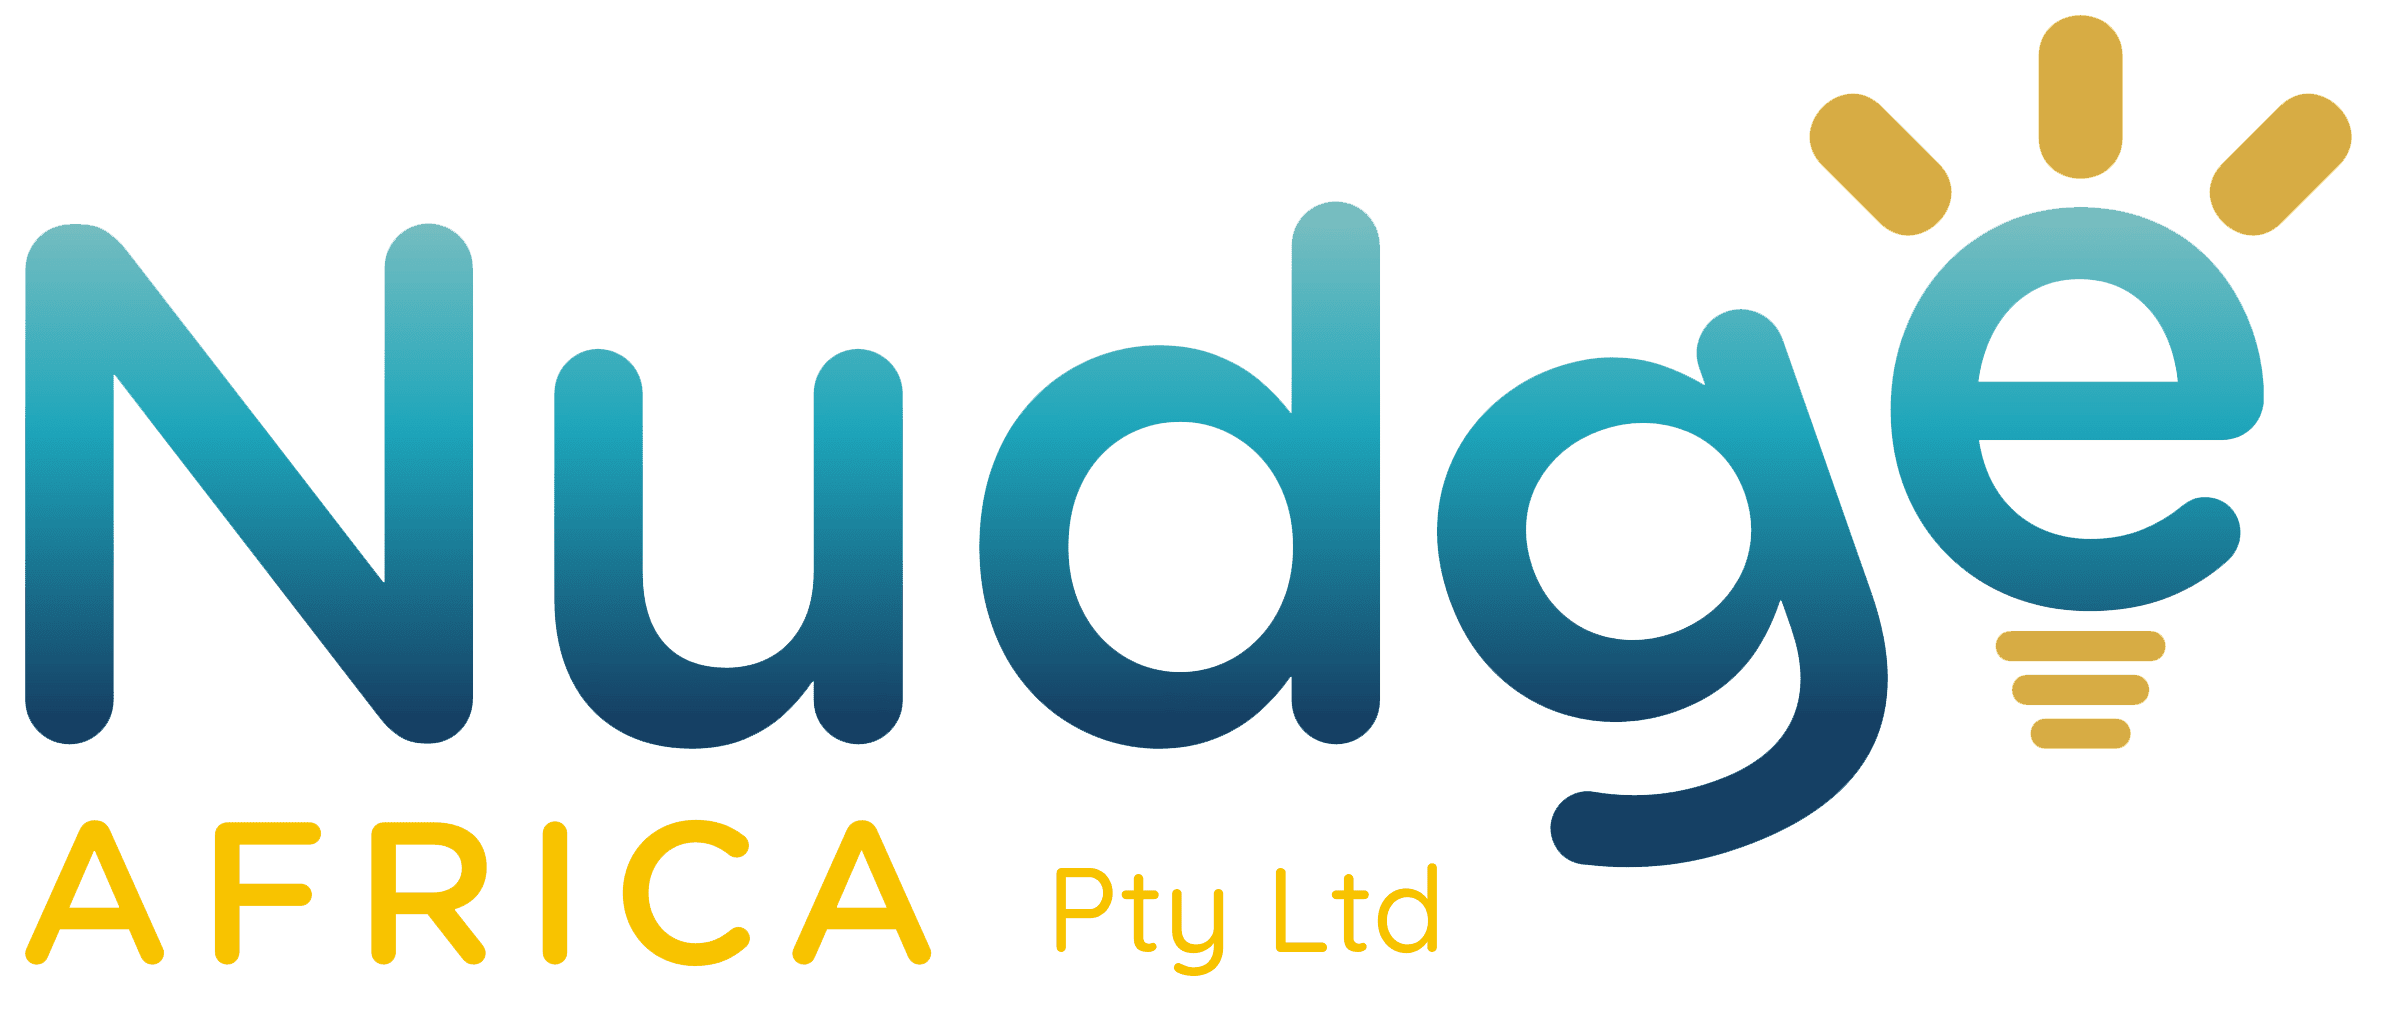 Nudge Africa Logo